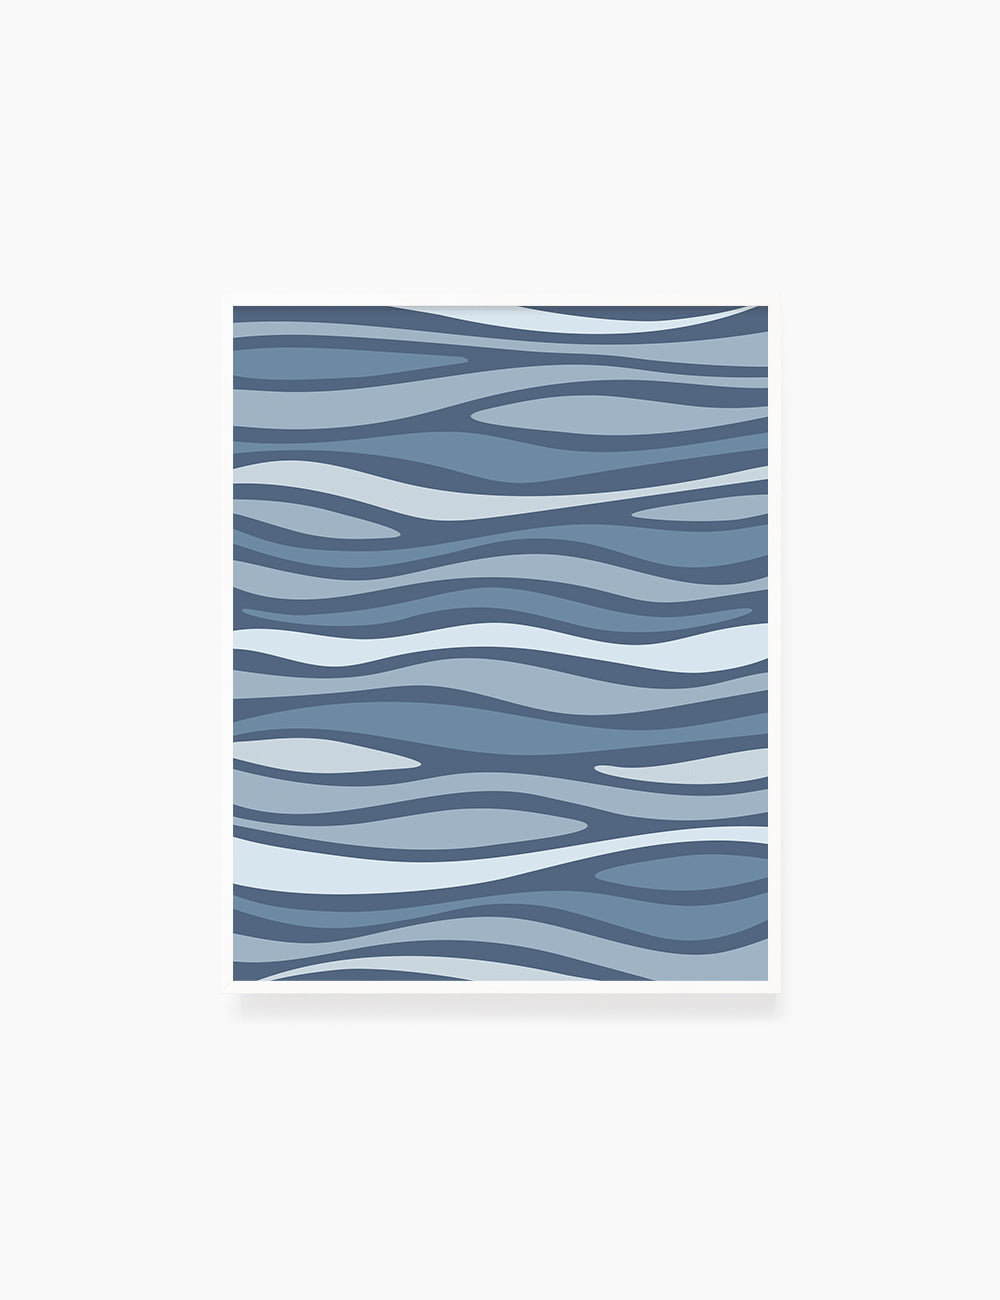 BLUE OCEAN WAVES. BOHO ART. Minimalist. Abstract. Printable Wall Art Illustration. - PAPER MOON Art & Design